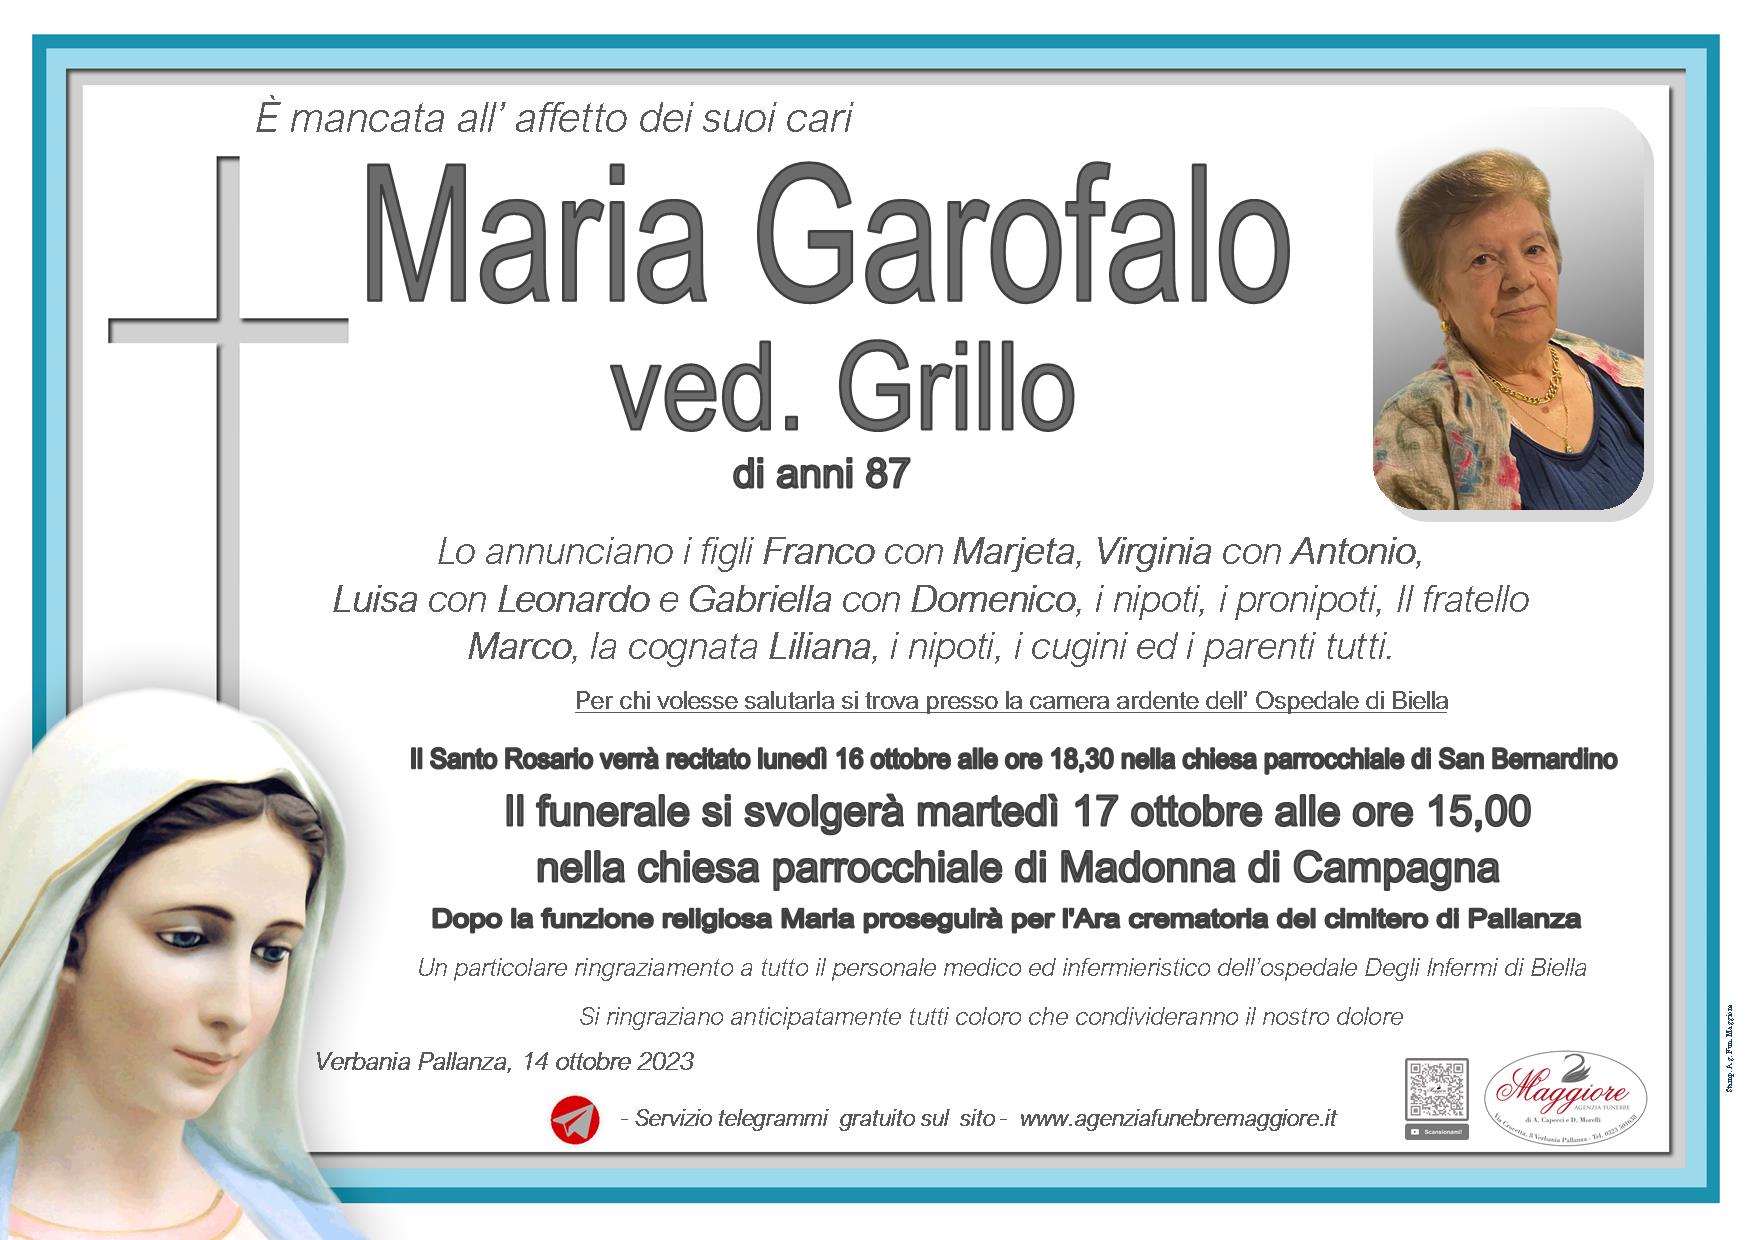 Maria  Garofalo ved. Grillo